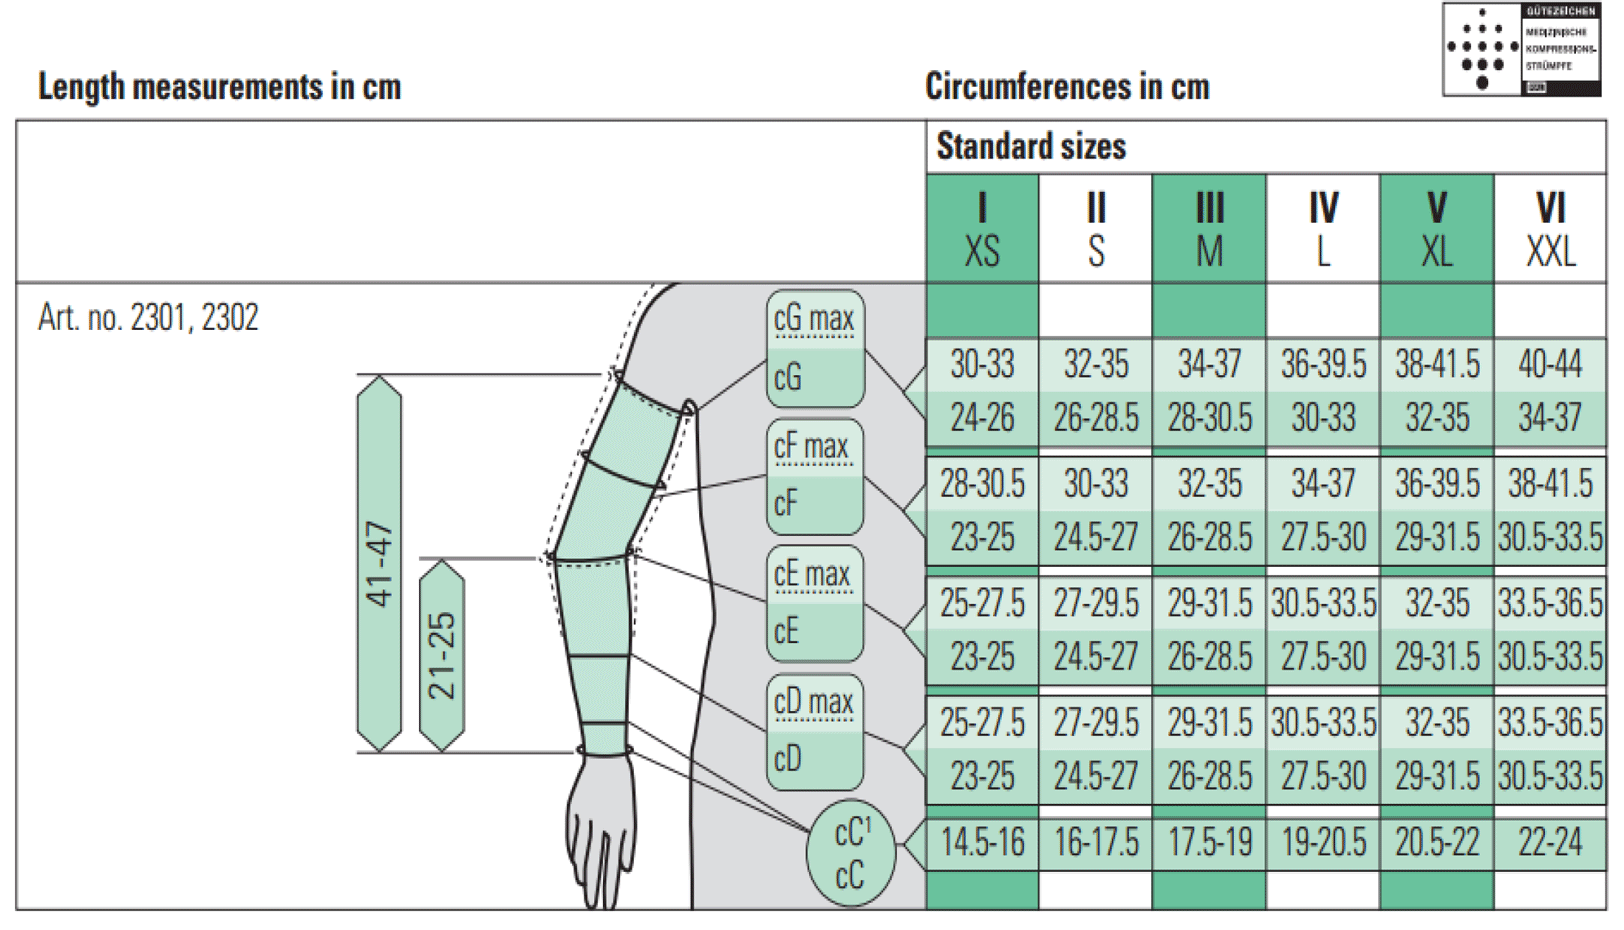 Compression Measurement Chart